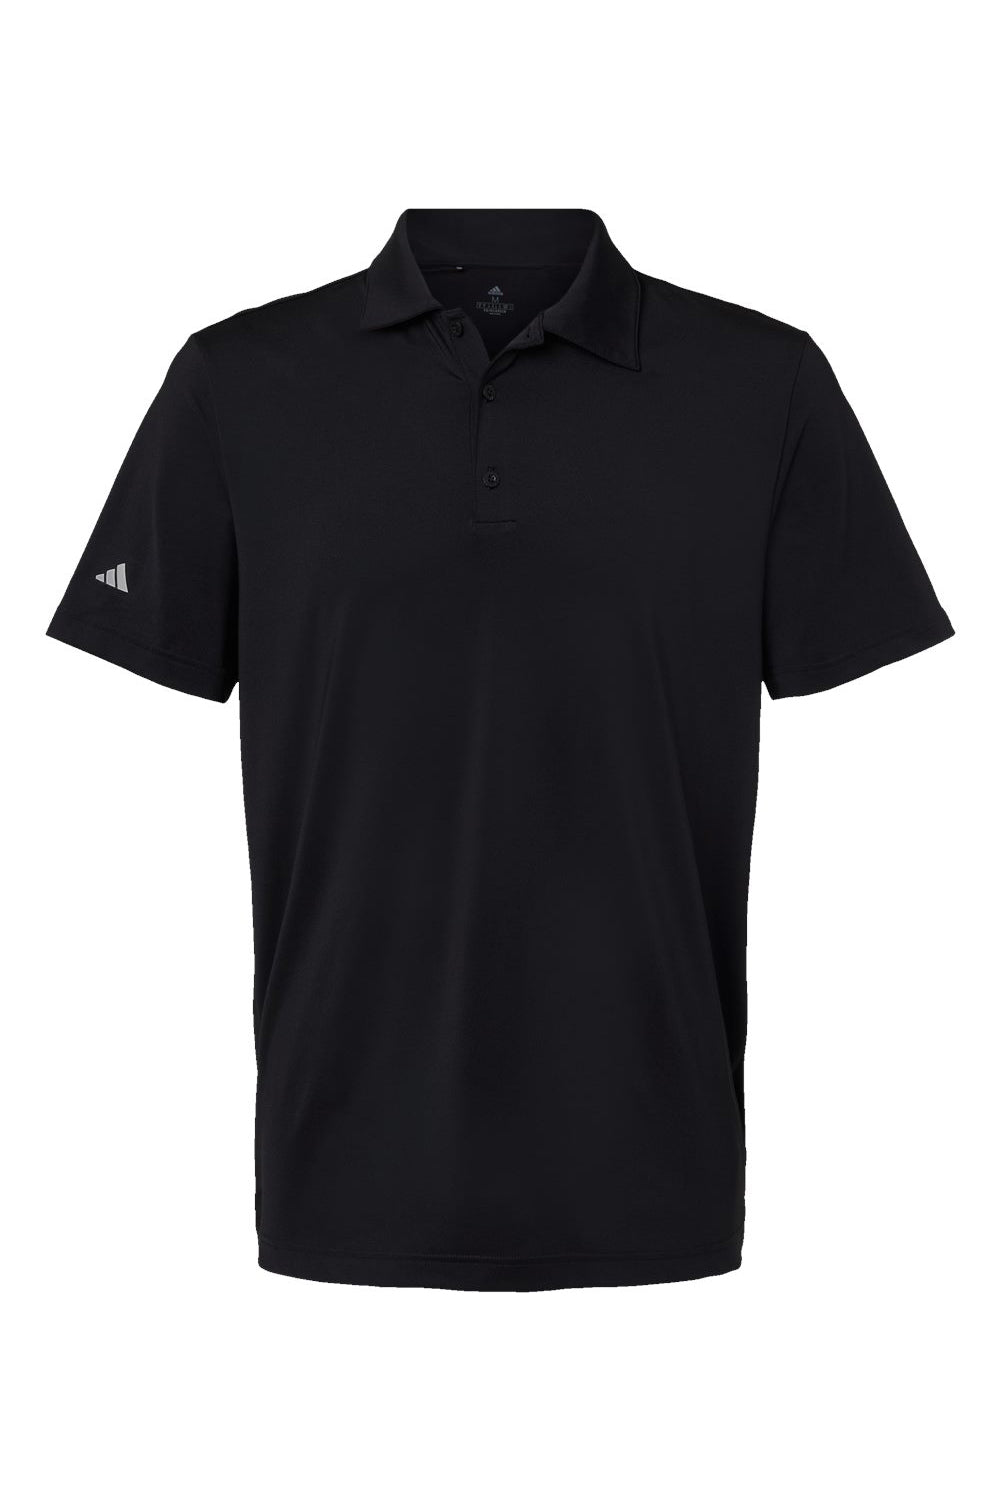 Adidas A514 Mens Ultimate Short Sleeve Polo Shirt Black Flat Front